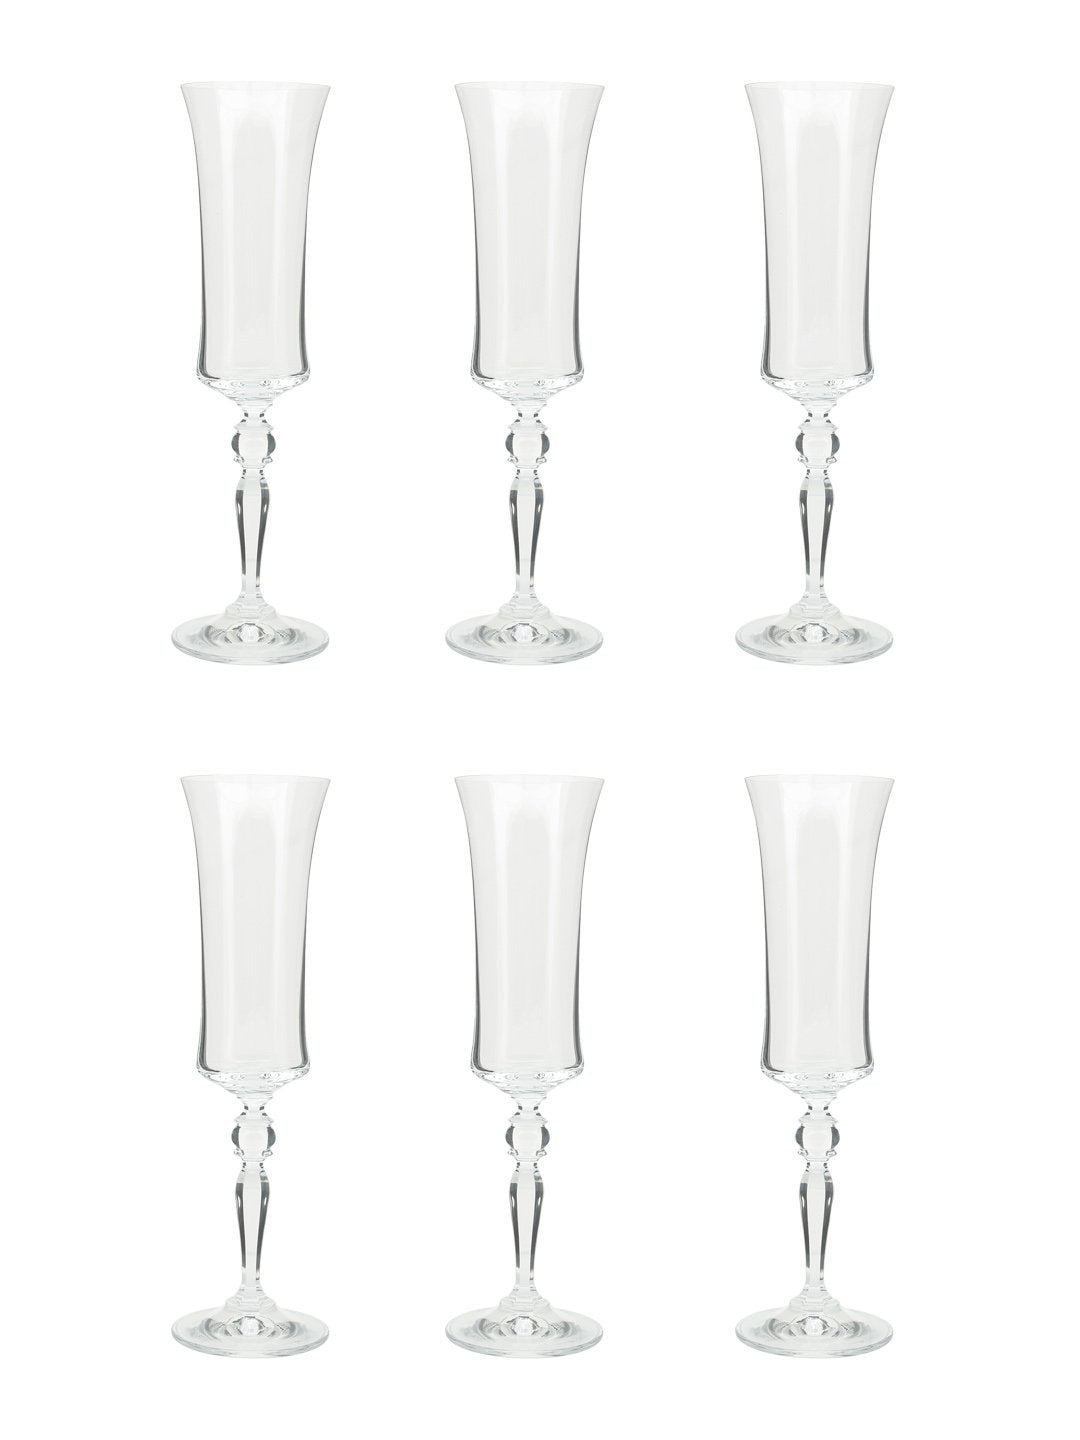 Bohemia Crystal Grace Champagne Flute 190 ML set of 6 pcs , Transparent , Non - lead Crystal | Champagne Flute